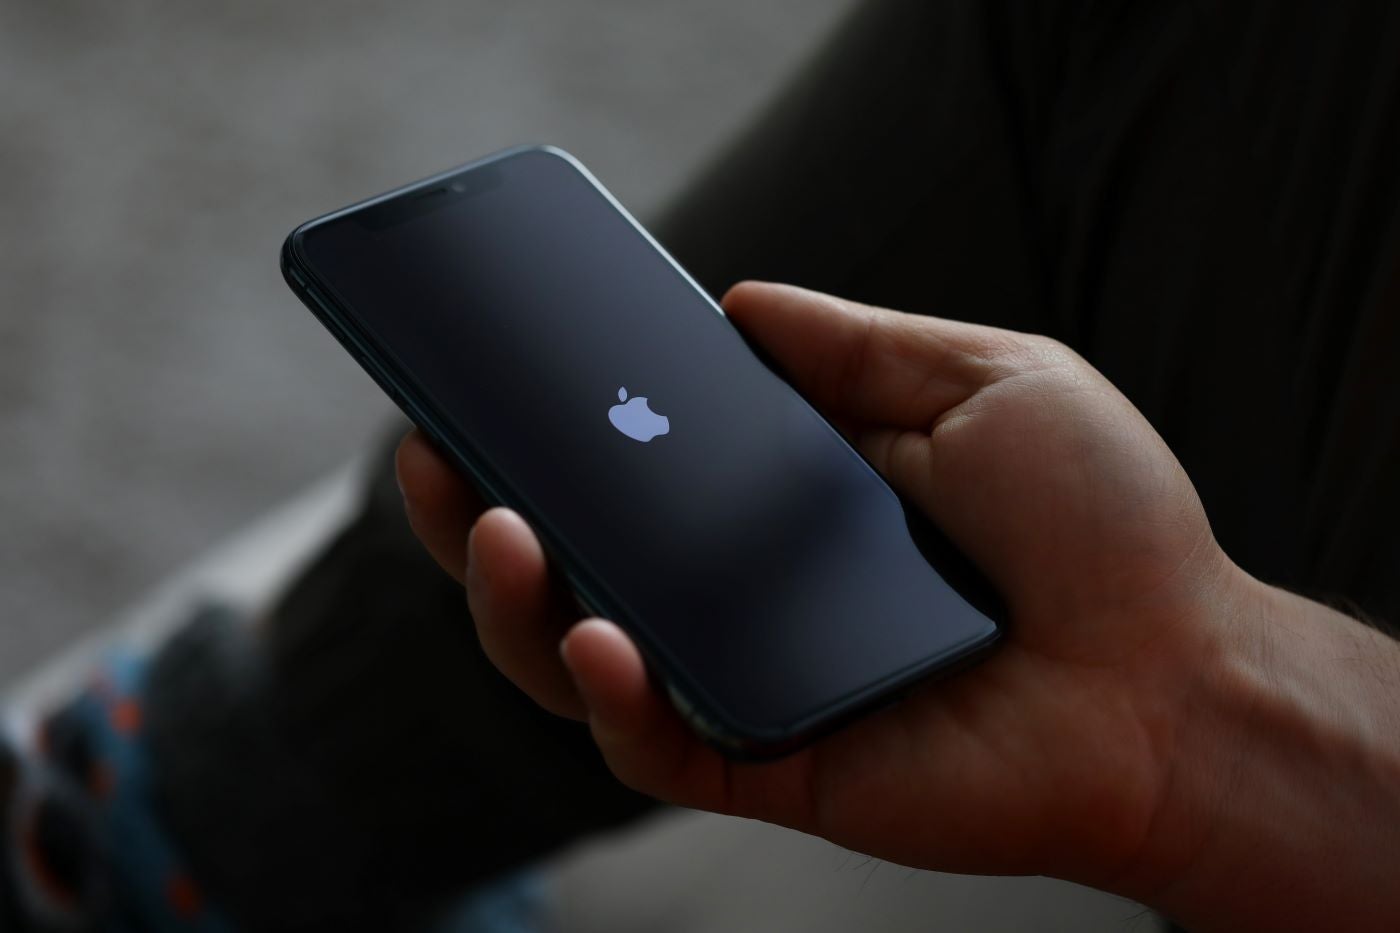 Apple alerta a los usuarios de iPhone sobre ataques de software espía mercenario